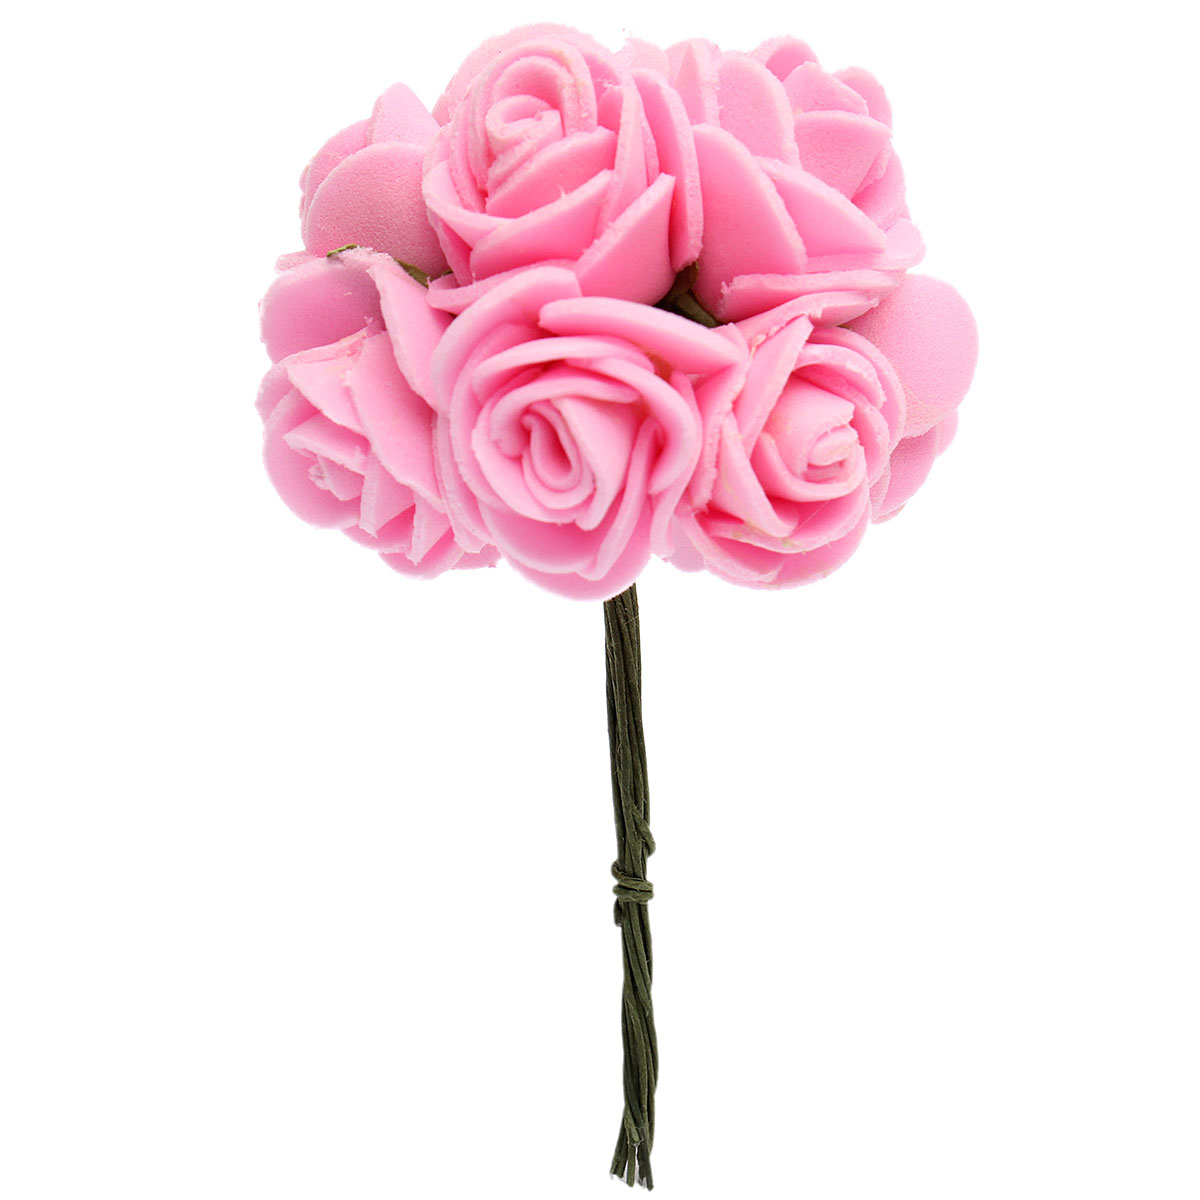 12PCS-Bride-Bouquet-Paper-Rose-Flowers-With-Wire-Stems-Wedding-Home-Party-Decoration-1029884